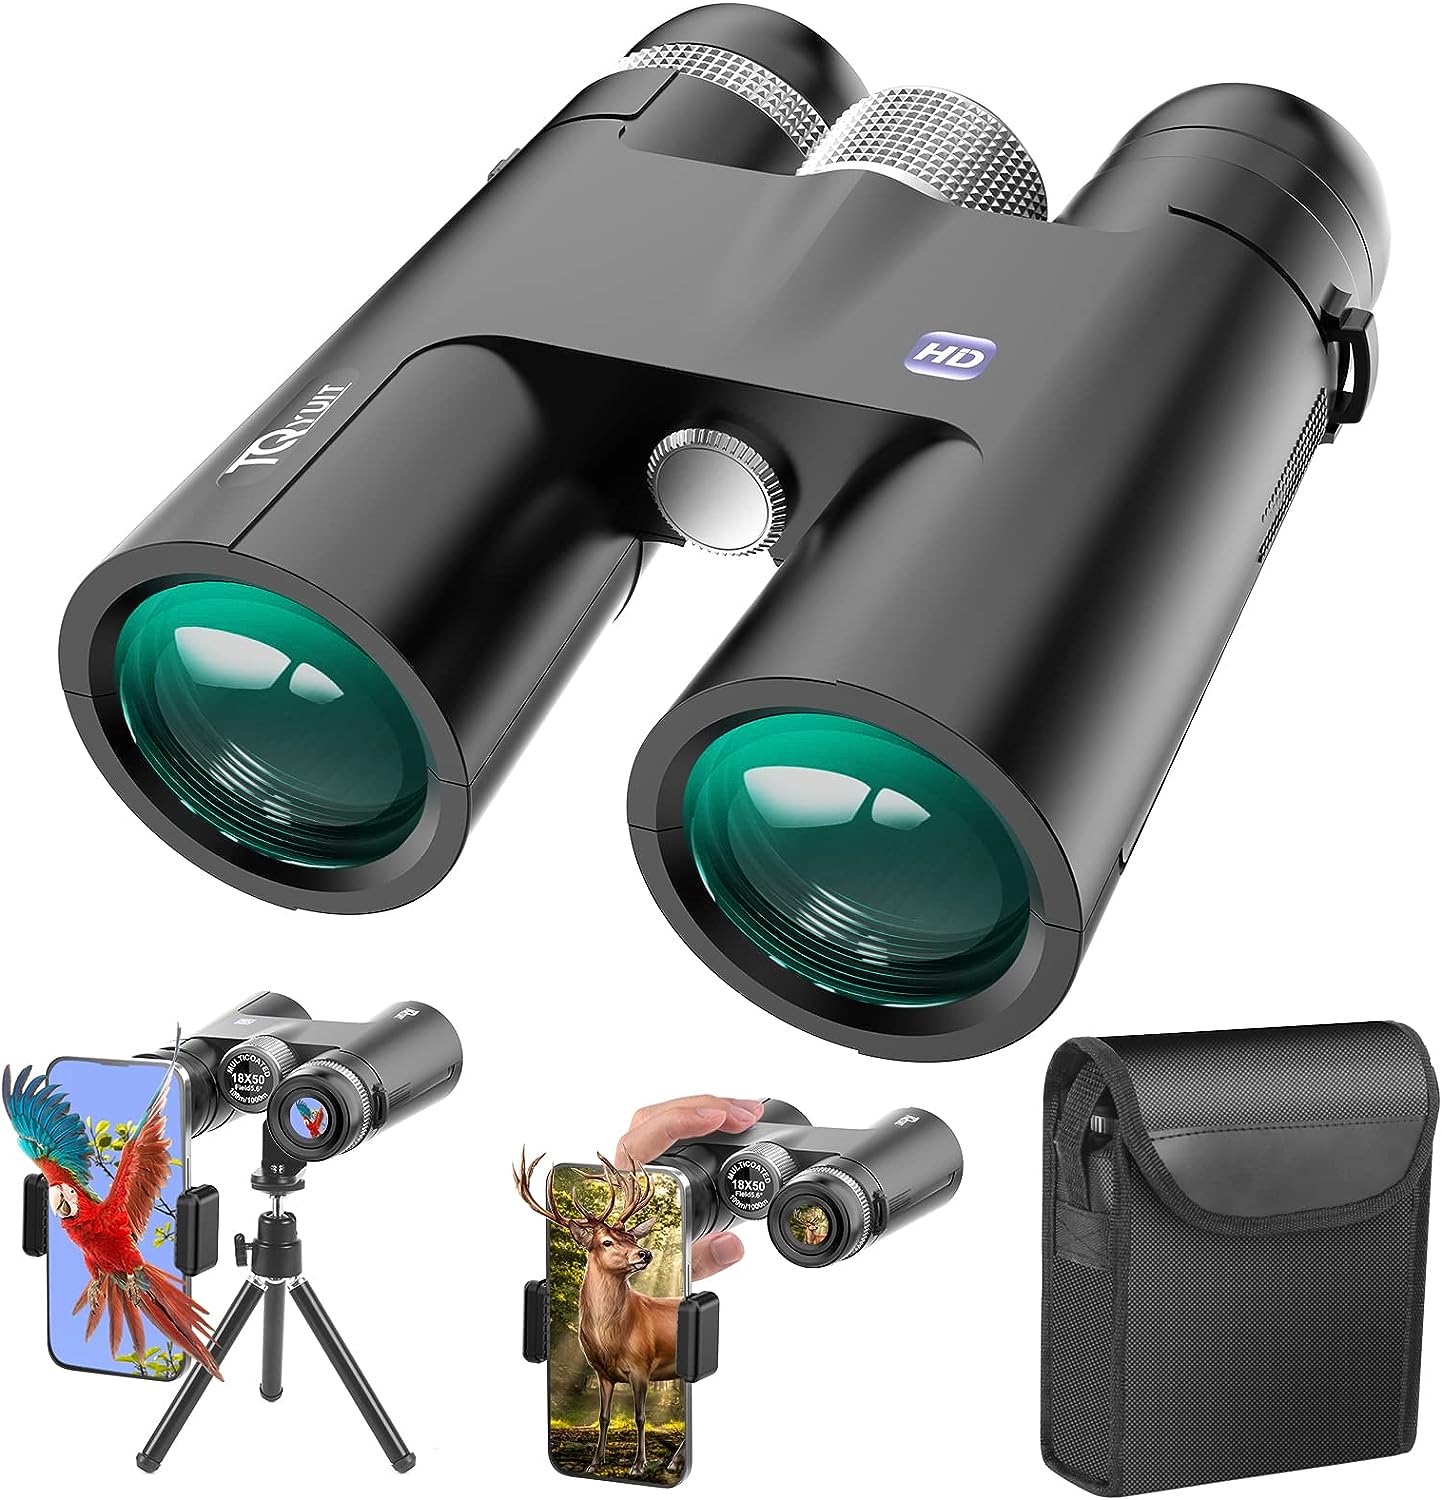 5. TQYUIT 18x50 HD Binoculars